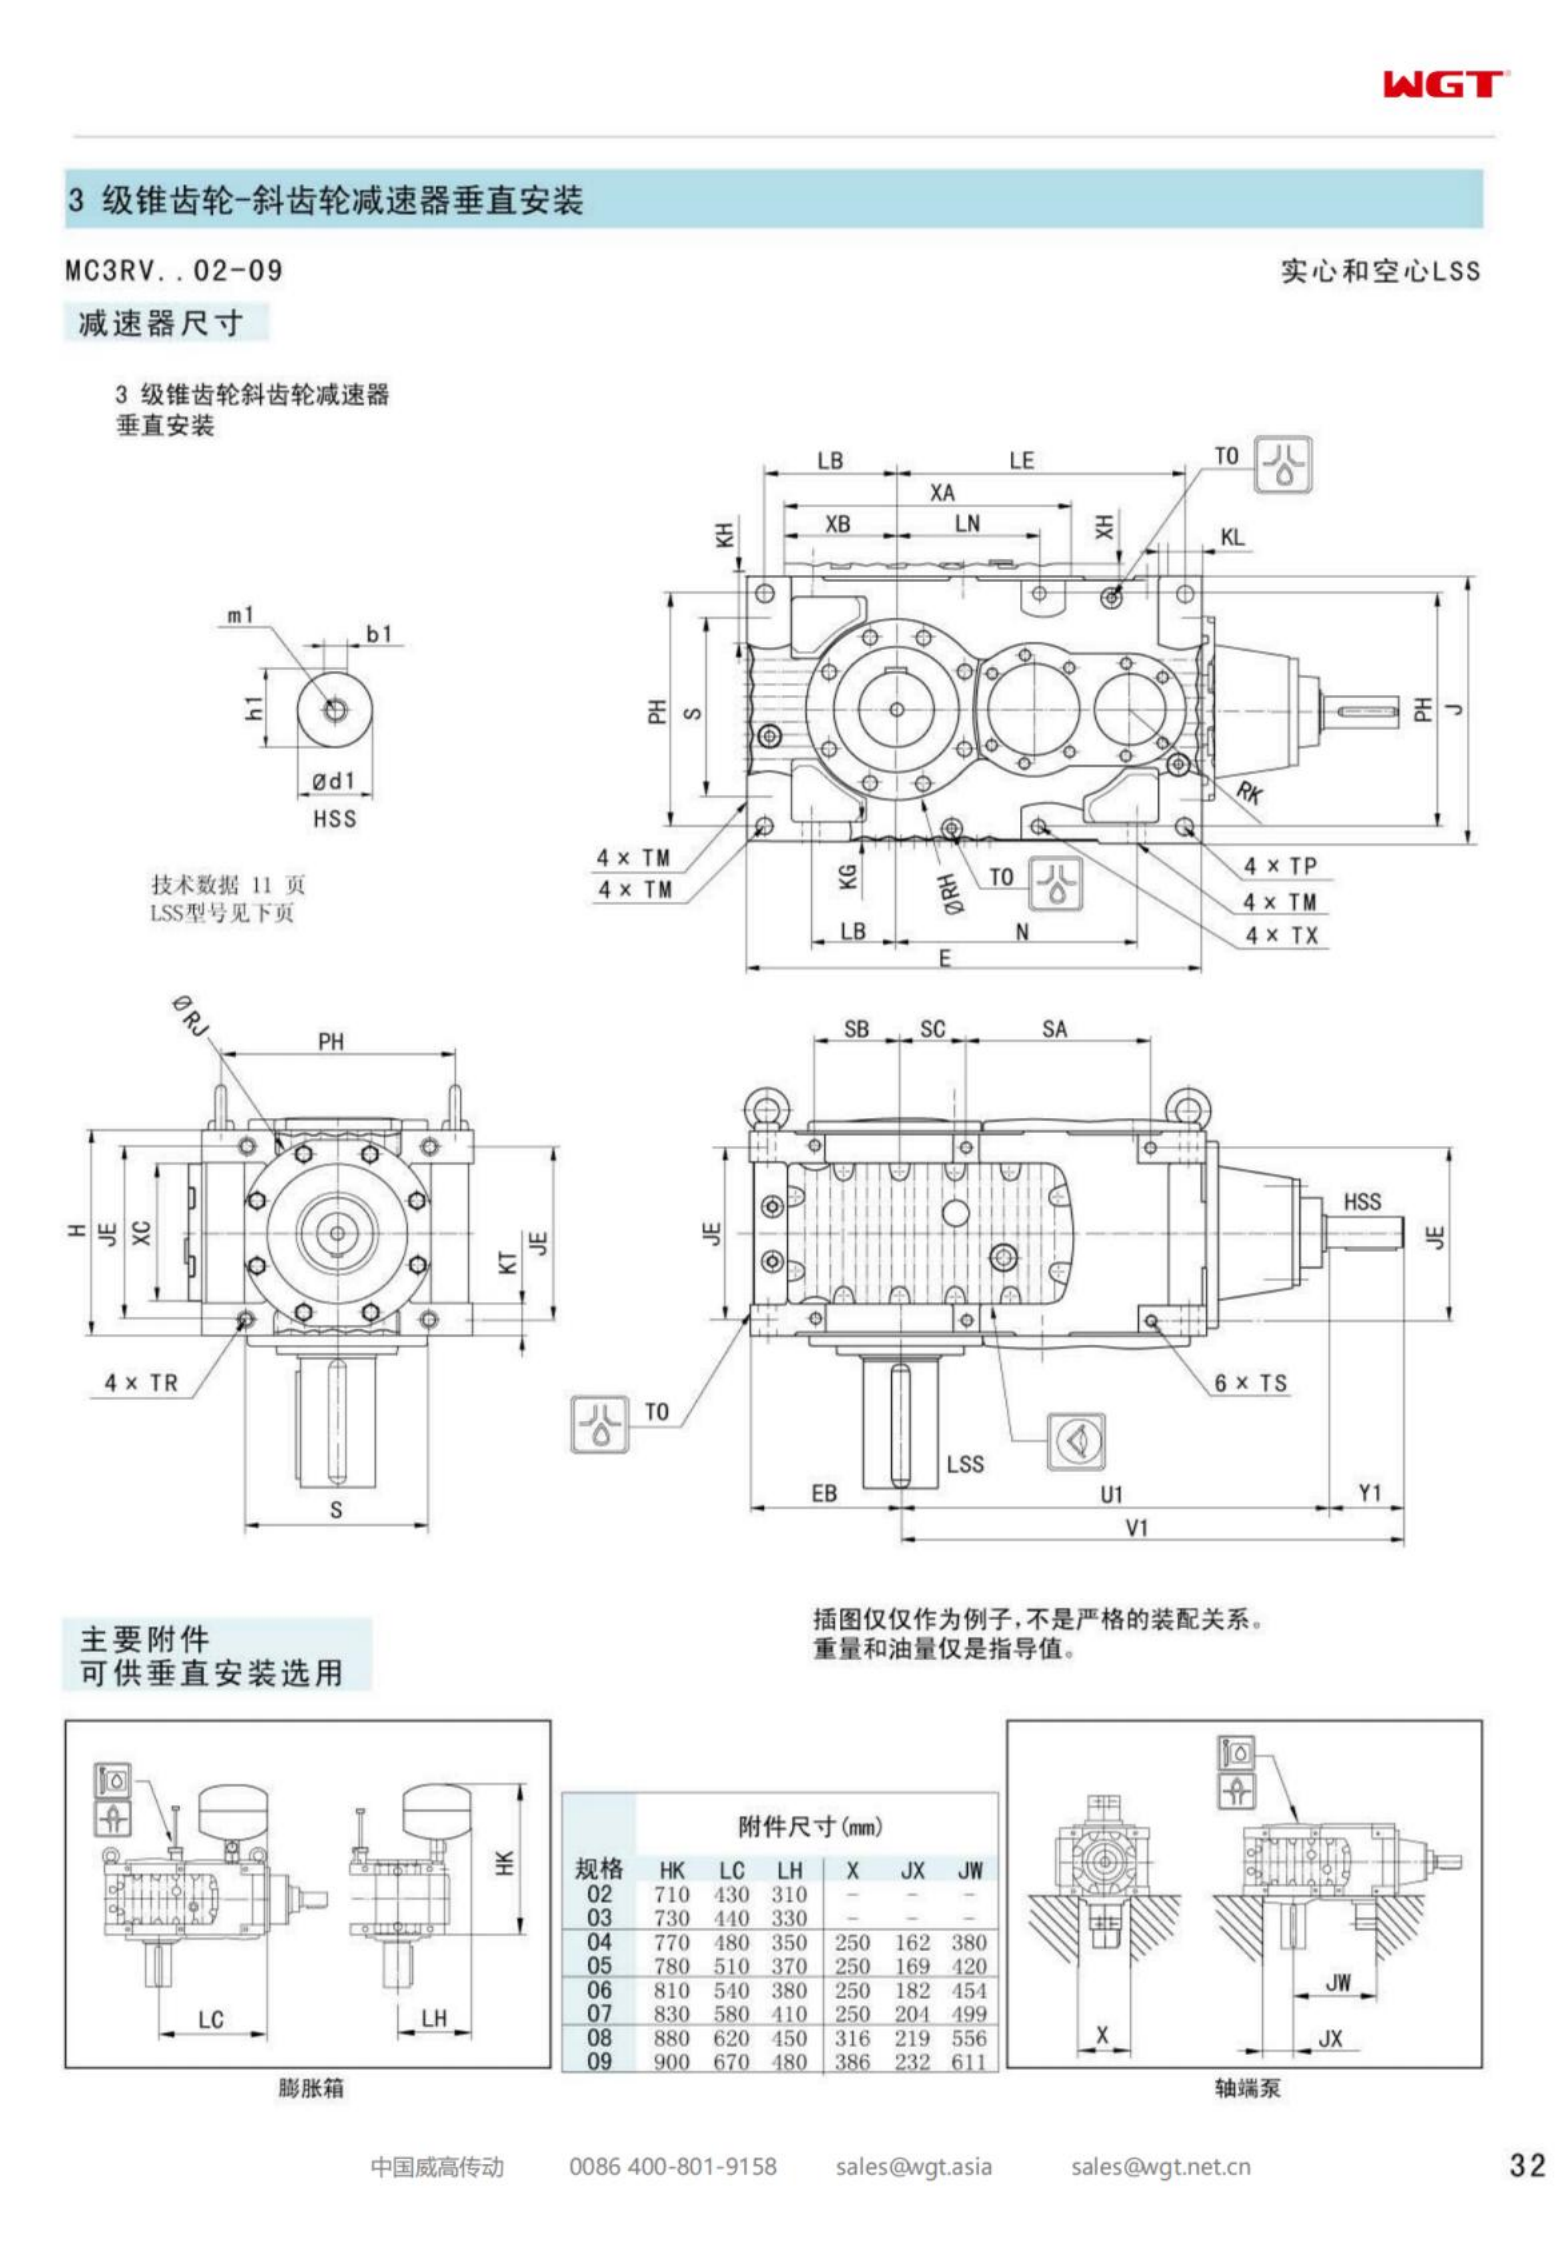 MC3RVSF02 replaces _SEW_MC_Series gearbox (patent)